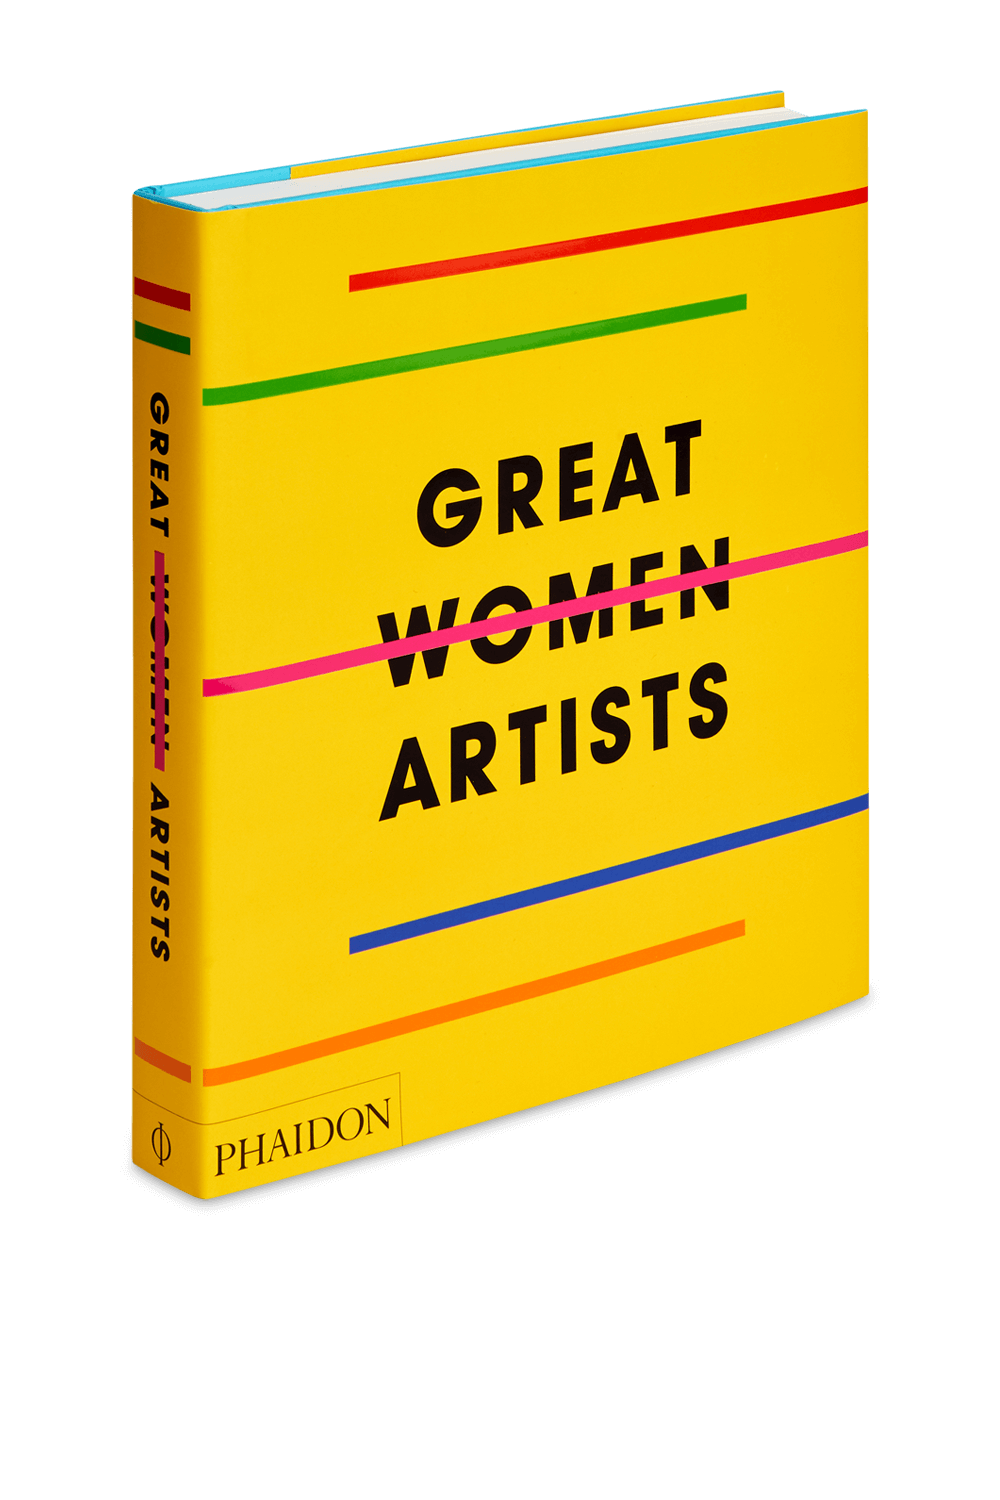 Great Women Artists PHAIDON